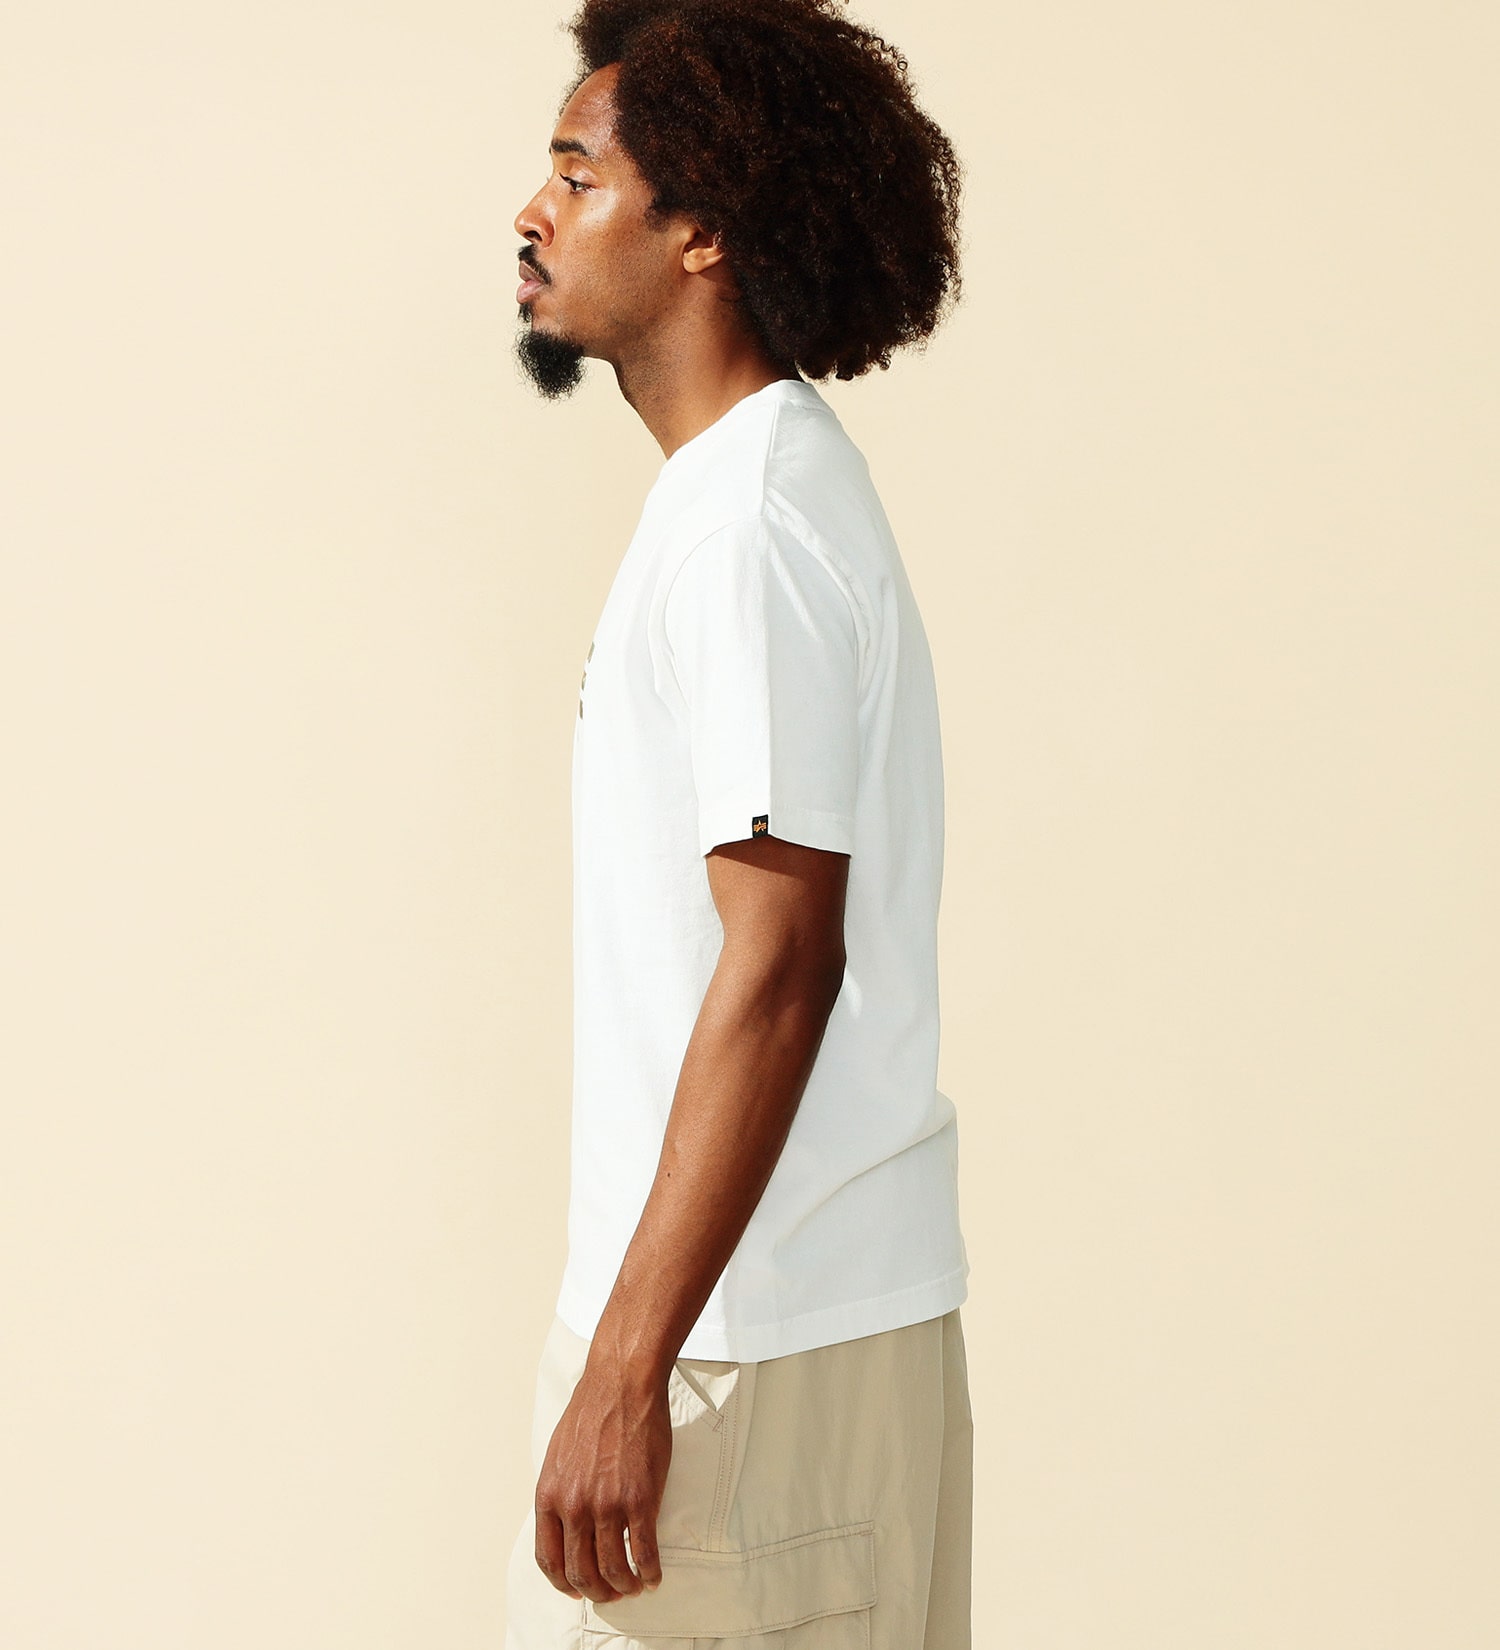 ALPHA(アルファ)のAマークロゴプリントTシャツ 半袖 (グリーンフロッグスキンカモ)|トップス/Tシャツ/カットソー/メンズ|ホワイト